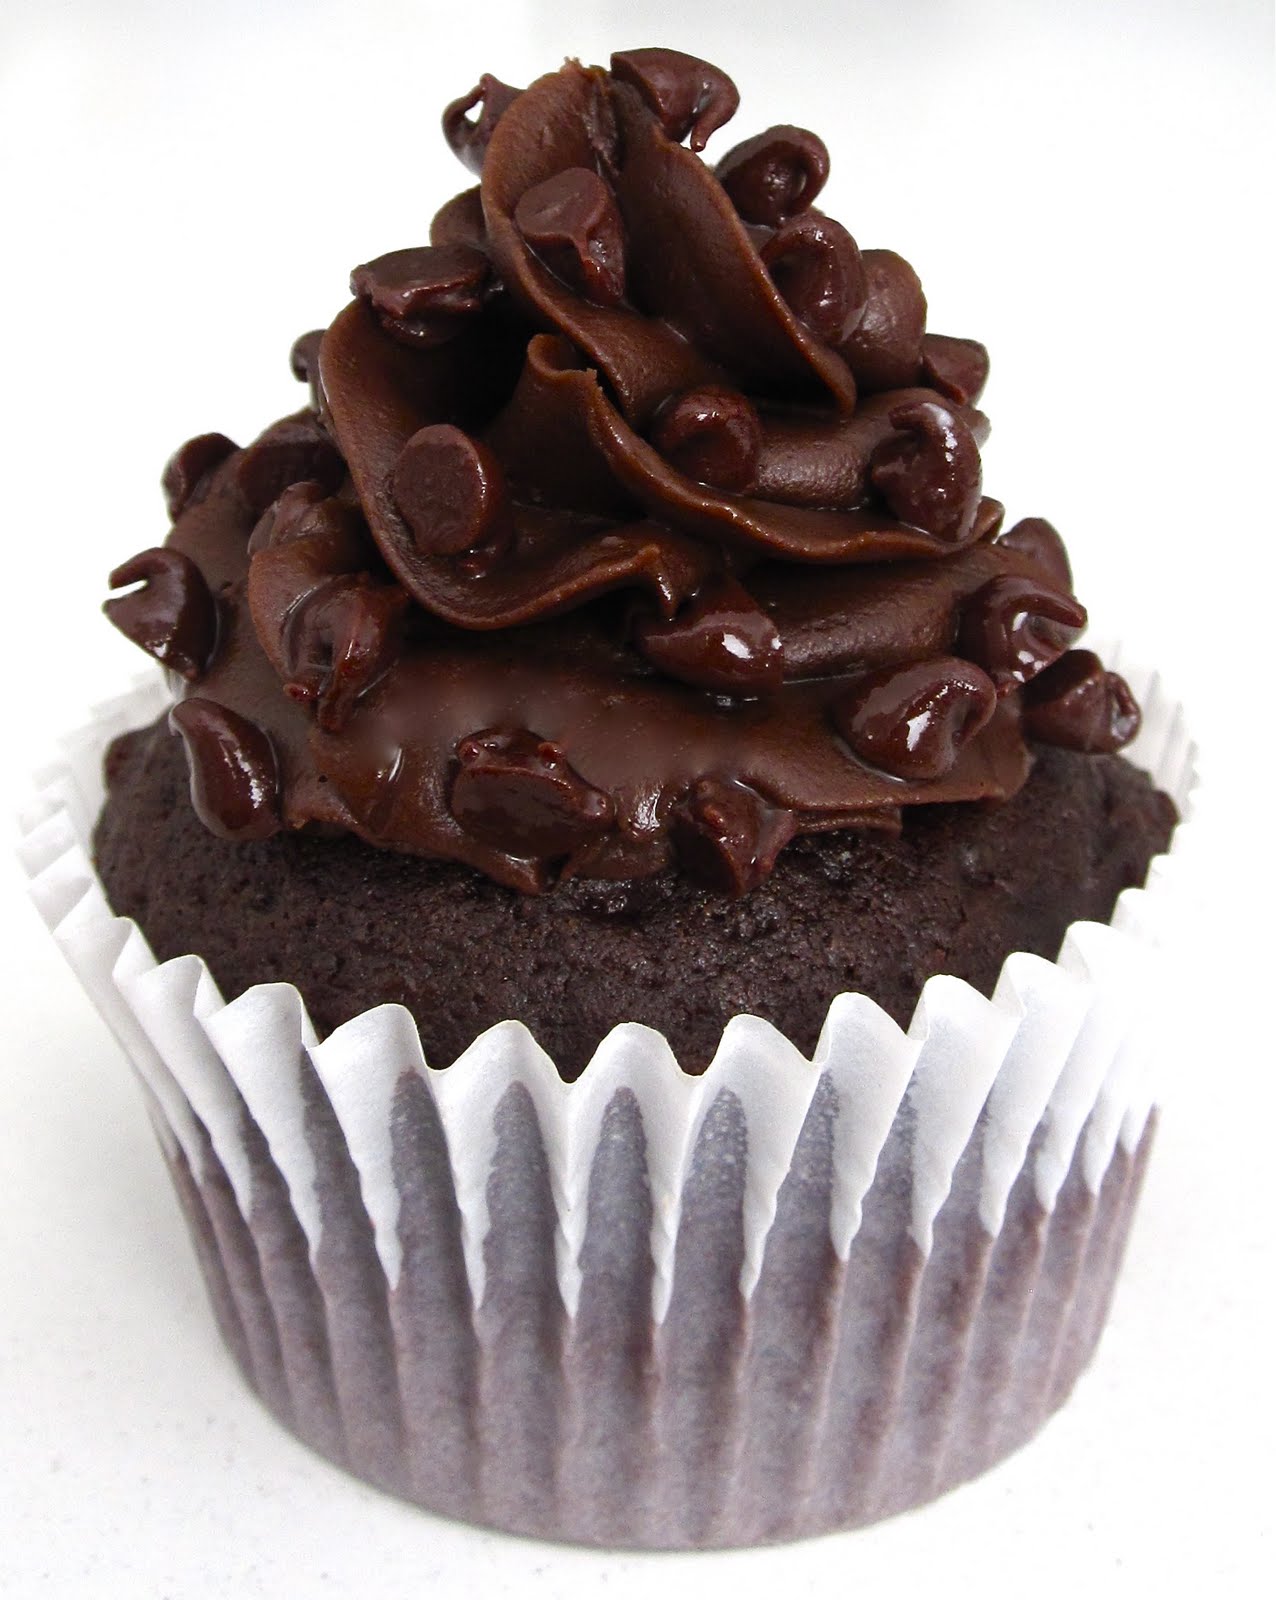 18803-cupcake-chocolate-chips.jpg